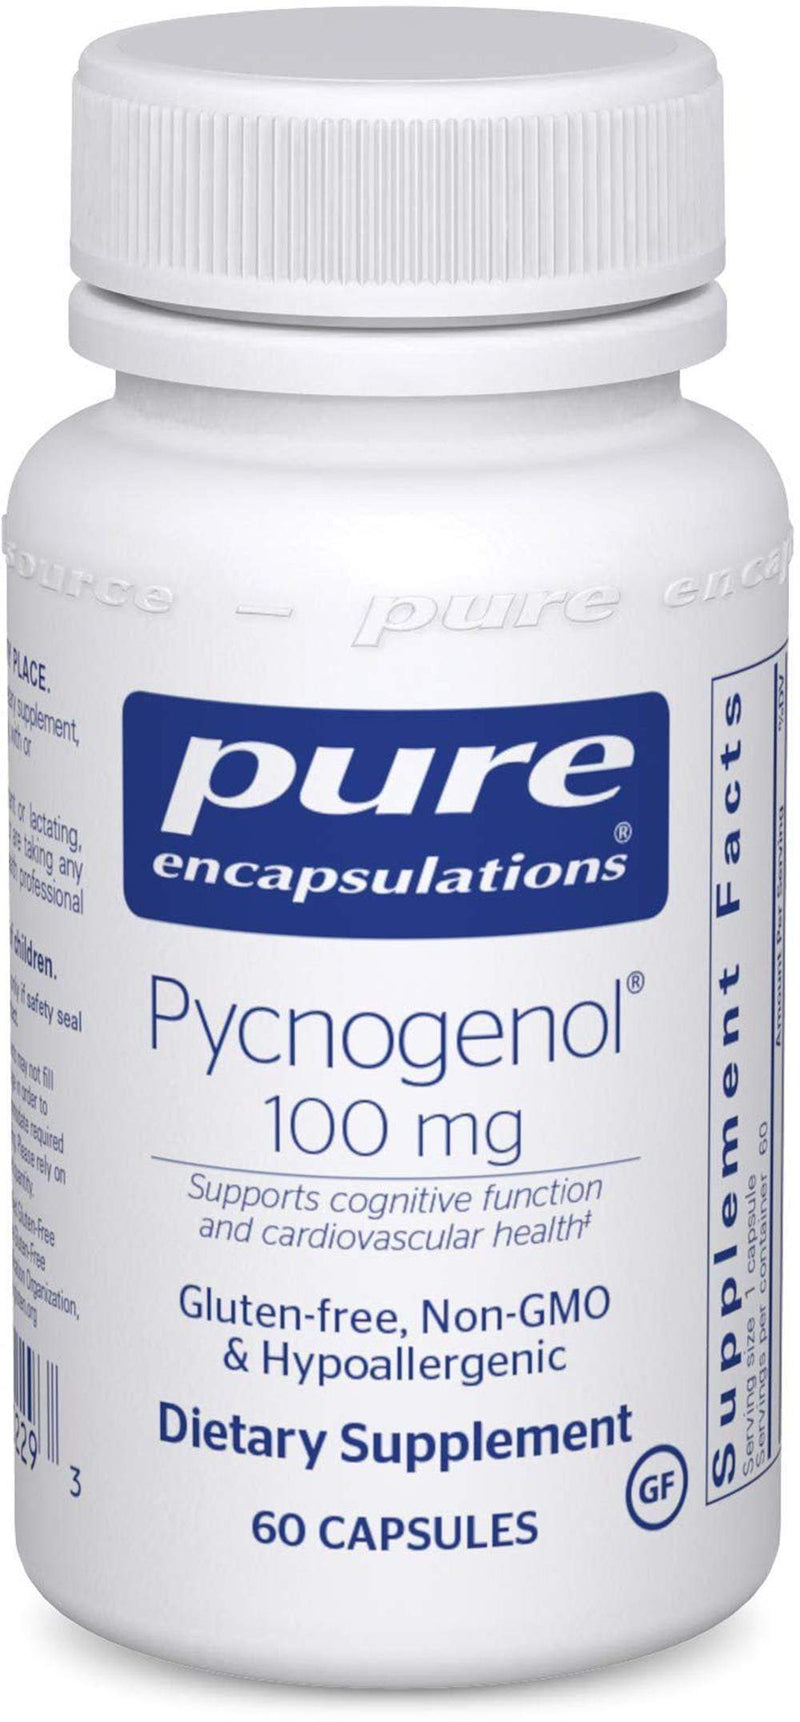 Pure Encapsulations Pycnogenol 100 mg -- 30 Capsules 60 capsules